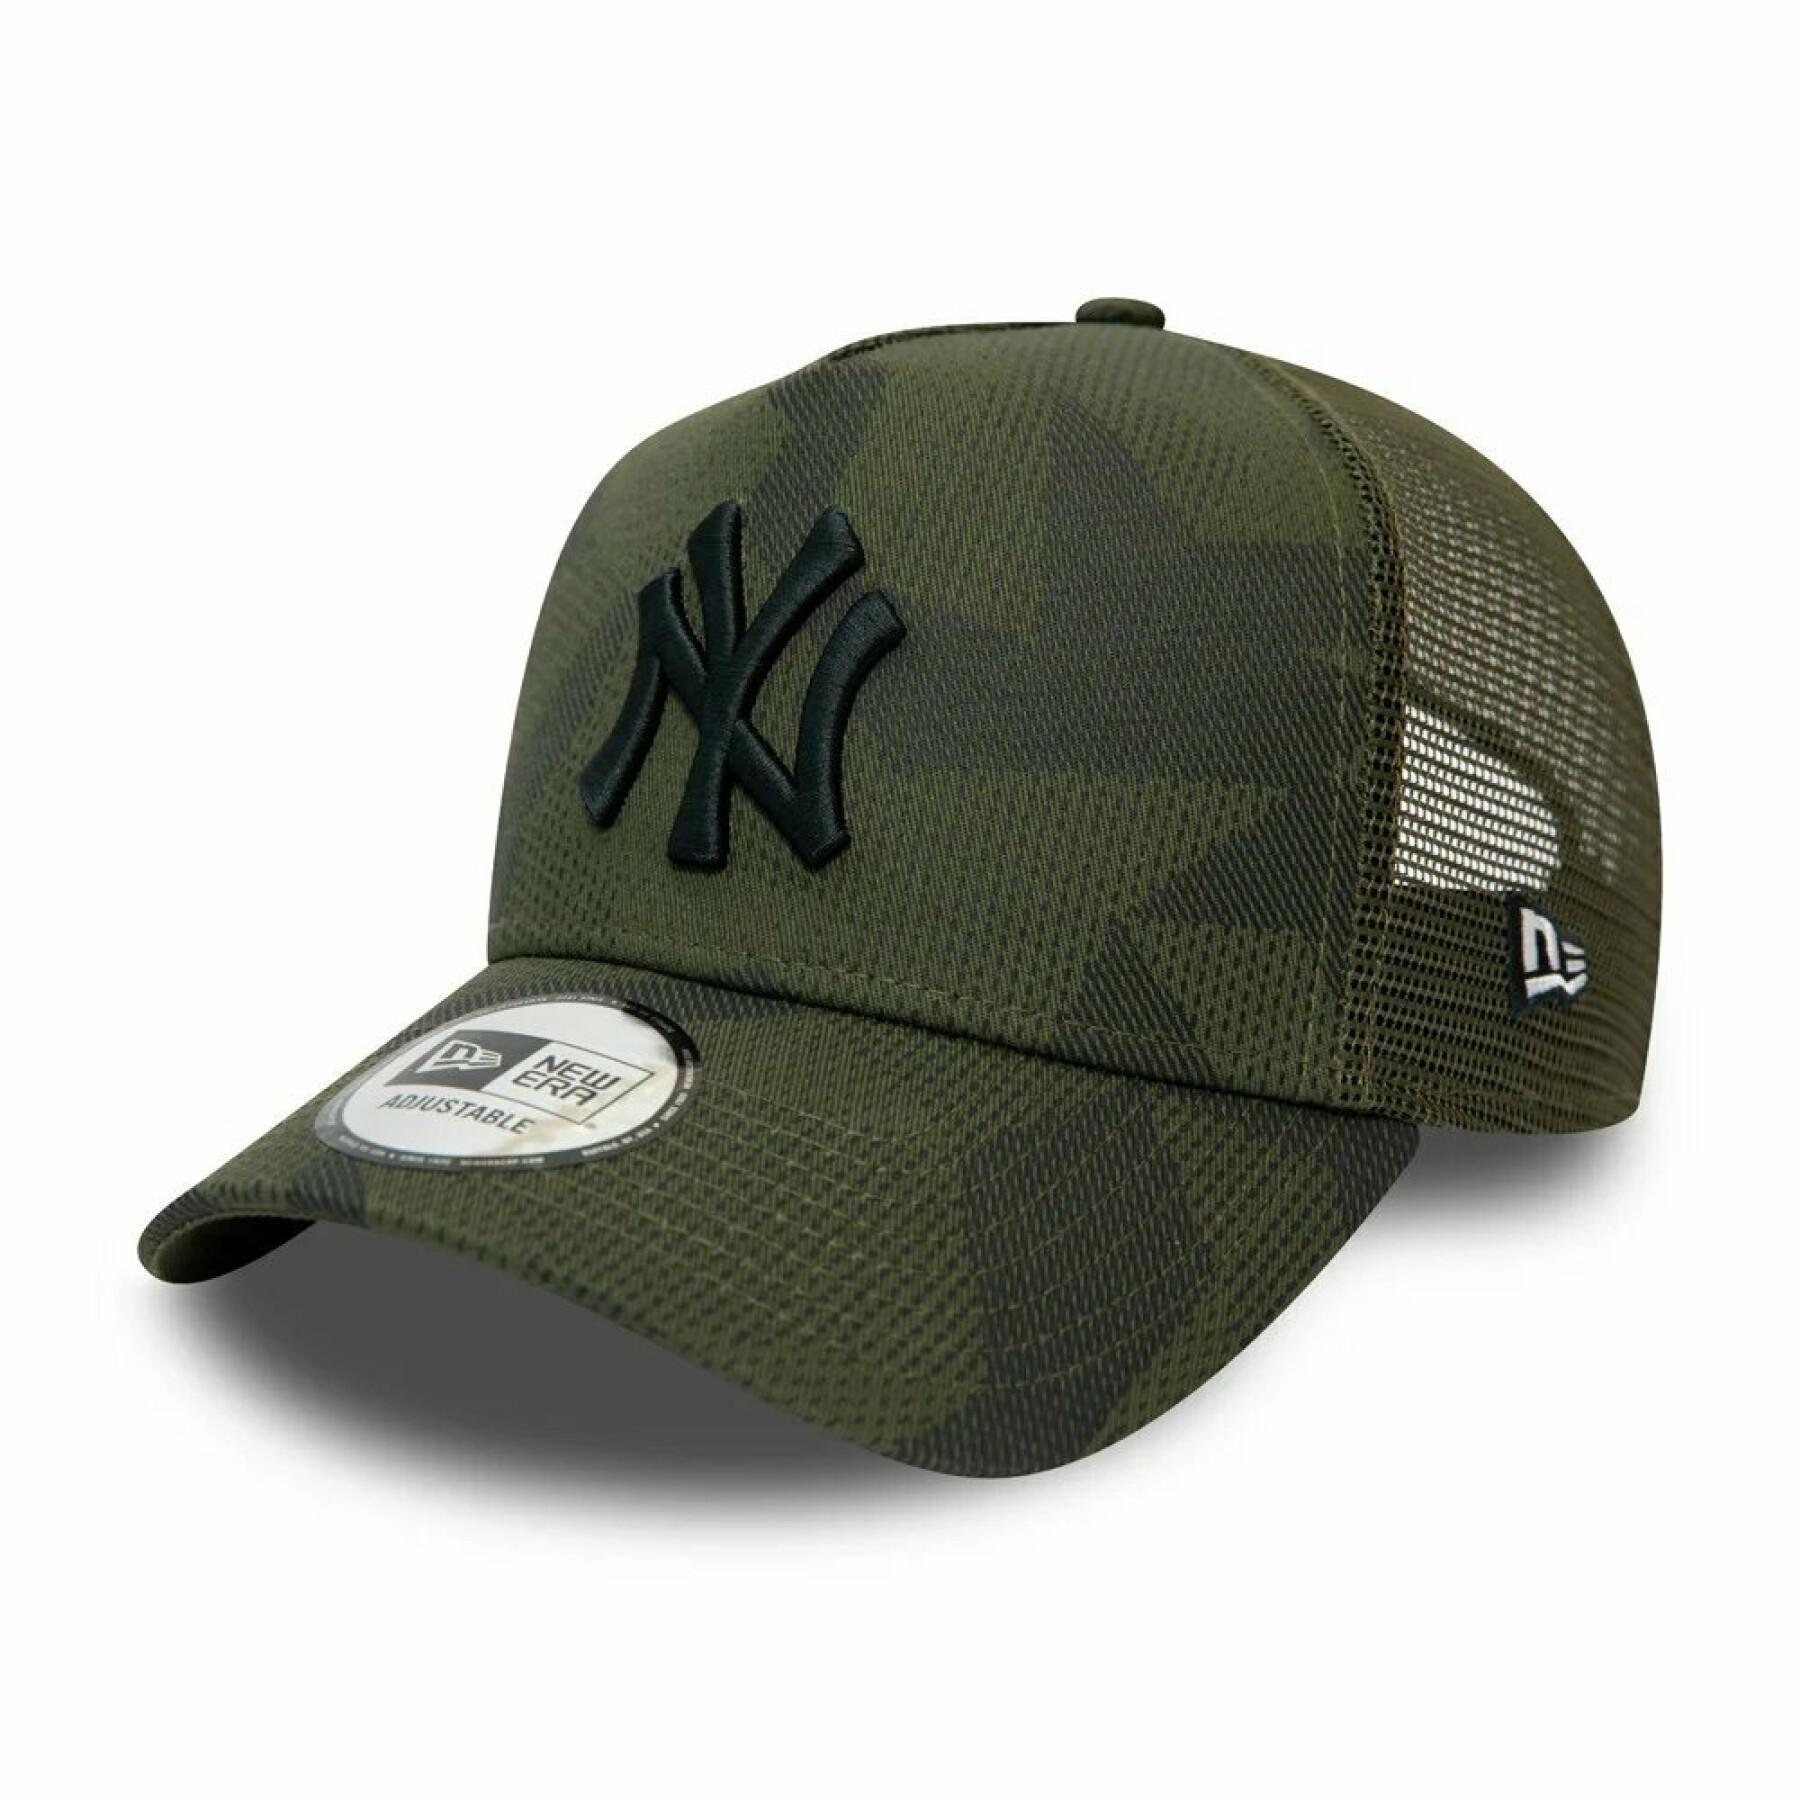 Trucker cap New York Yankees